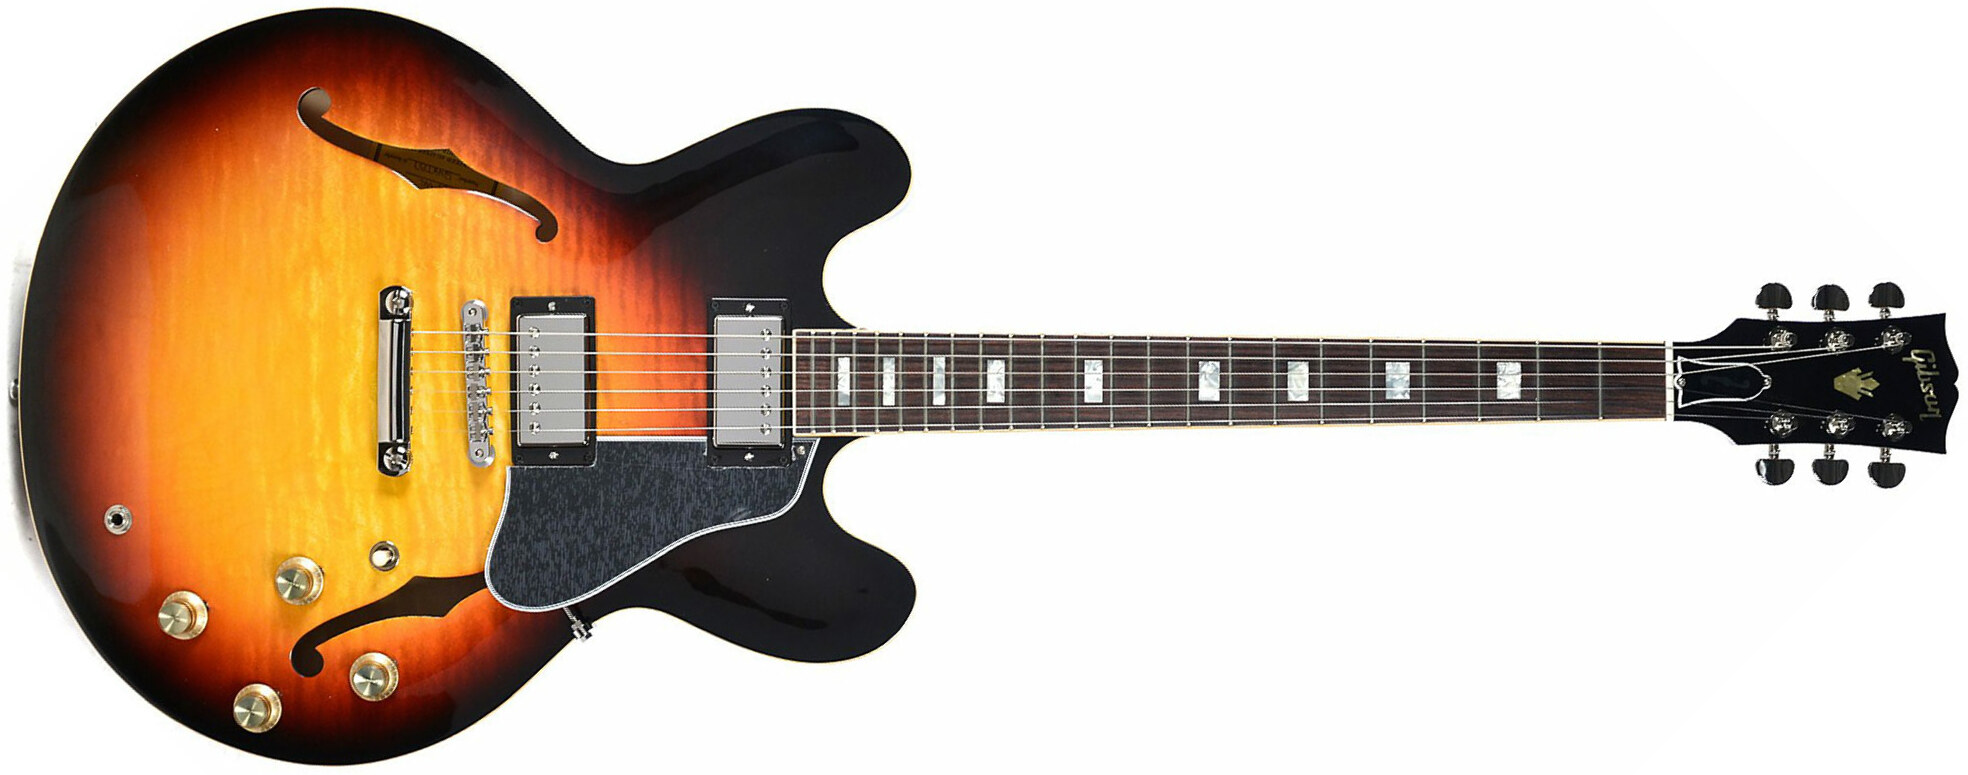 Gibson Es-335 Figured 2018 Ltd - Antique Sunset Burst - Semi-hollow electric guitar - Main picture